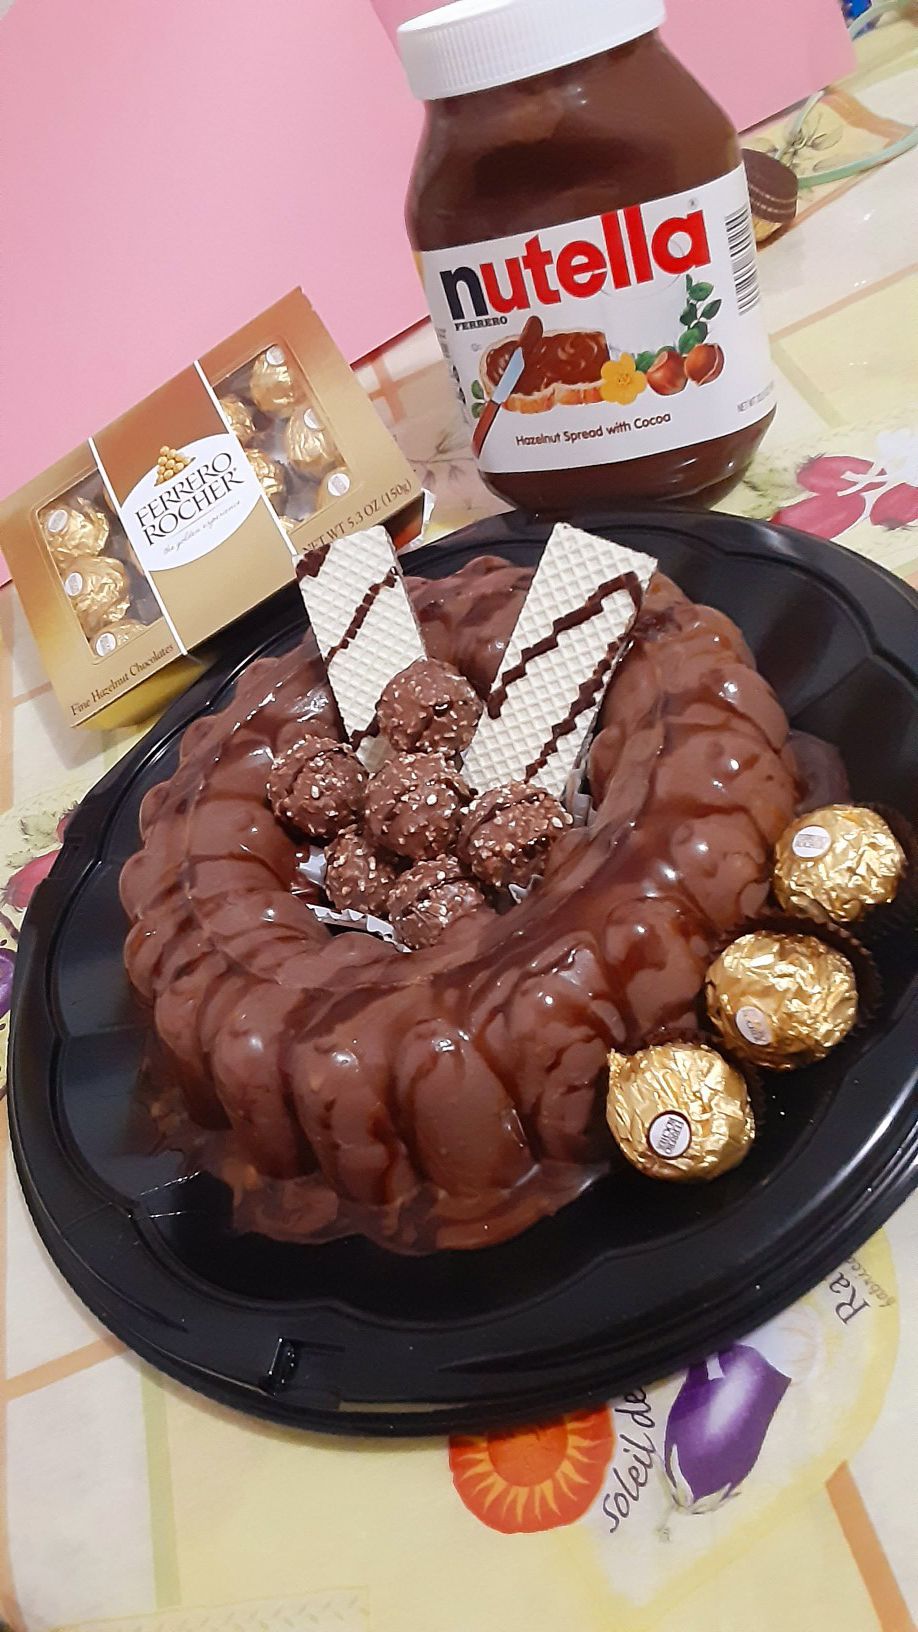 Ferrero rochet/nutella& piña colada